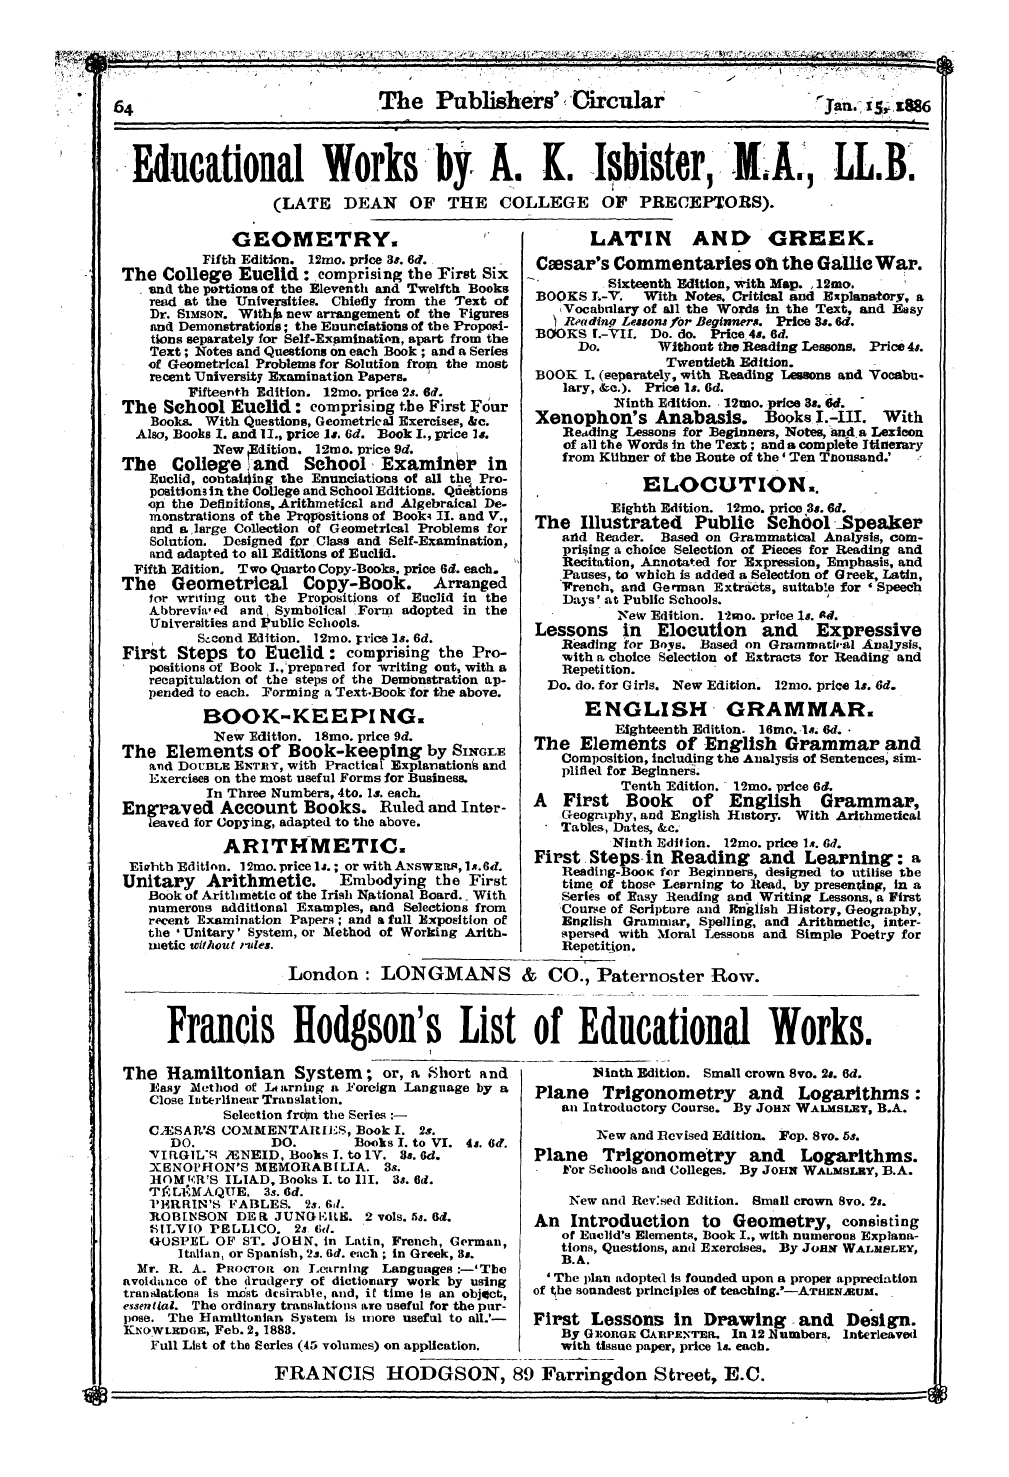 Publishers’ Circular (1880-1890): jS F Y, 1st edition: 66